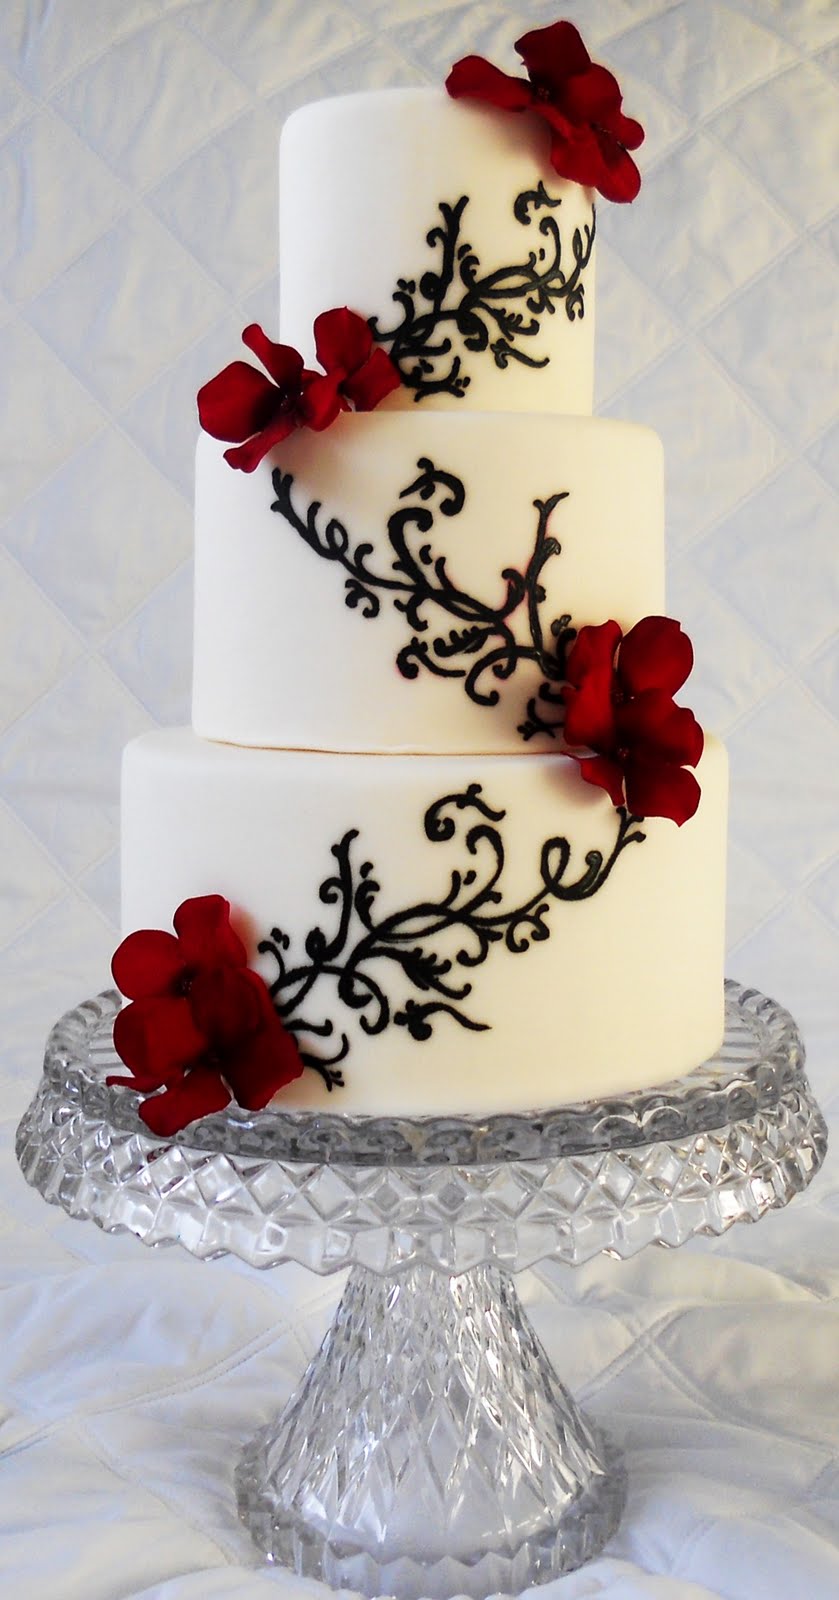 Black+and+white+wedding+cake+with+red+hydrangias.jpg